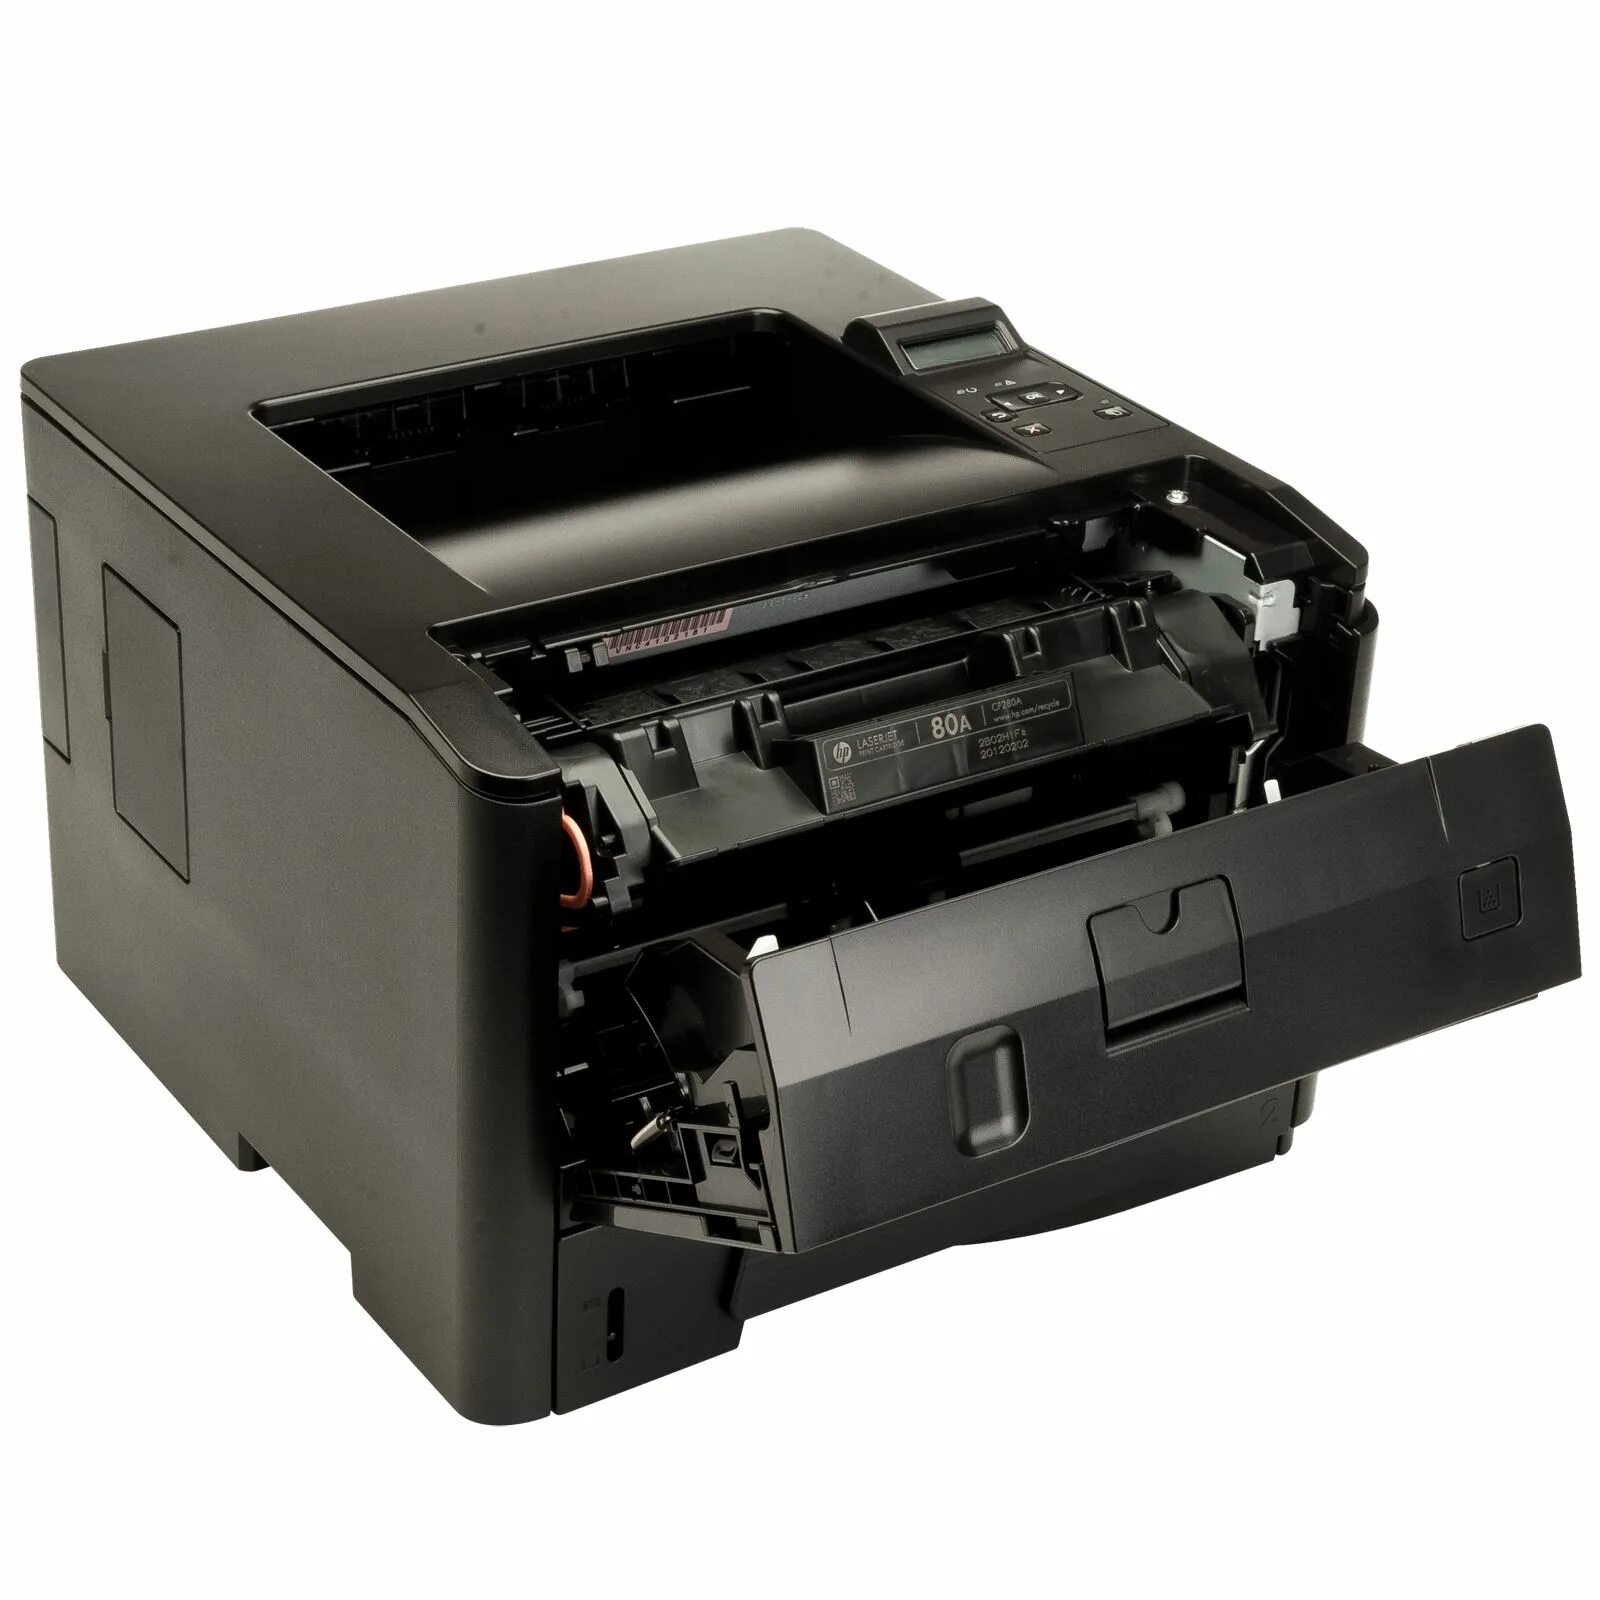 Laserjet pro 400. HP LASERJET 400 m401d. Принтер HP Pro 400 m401d. LASERJET Pro 400 m401d (cf274a). HP LASERJET Pro m401d.